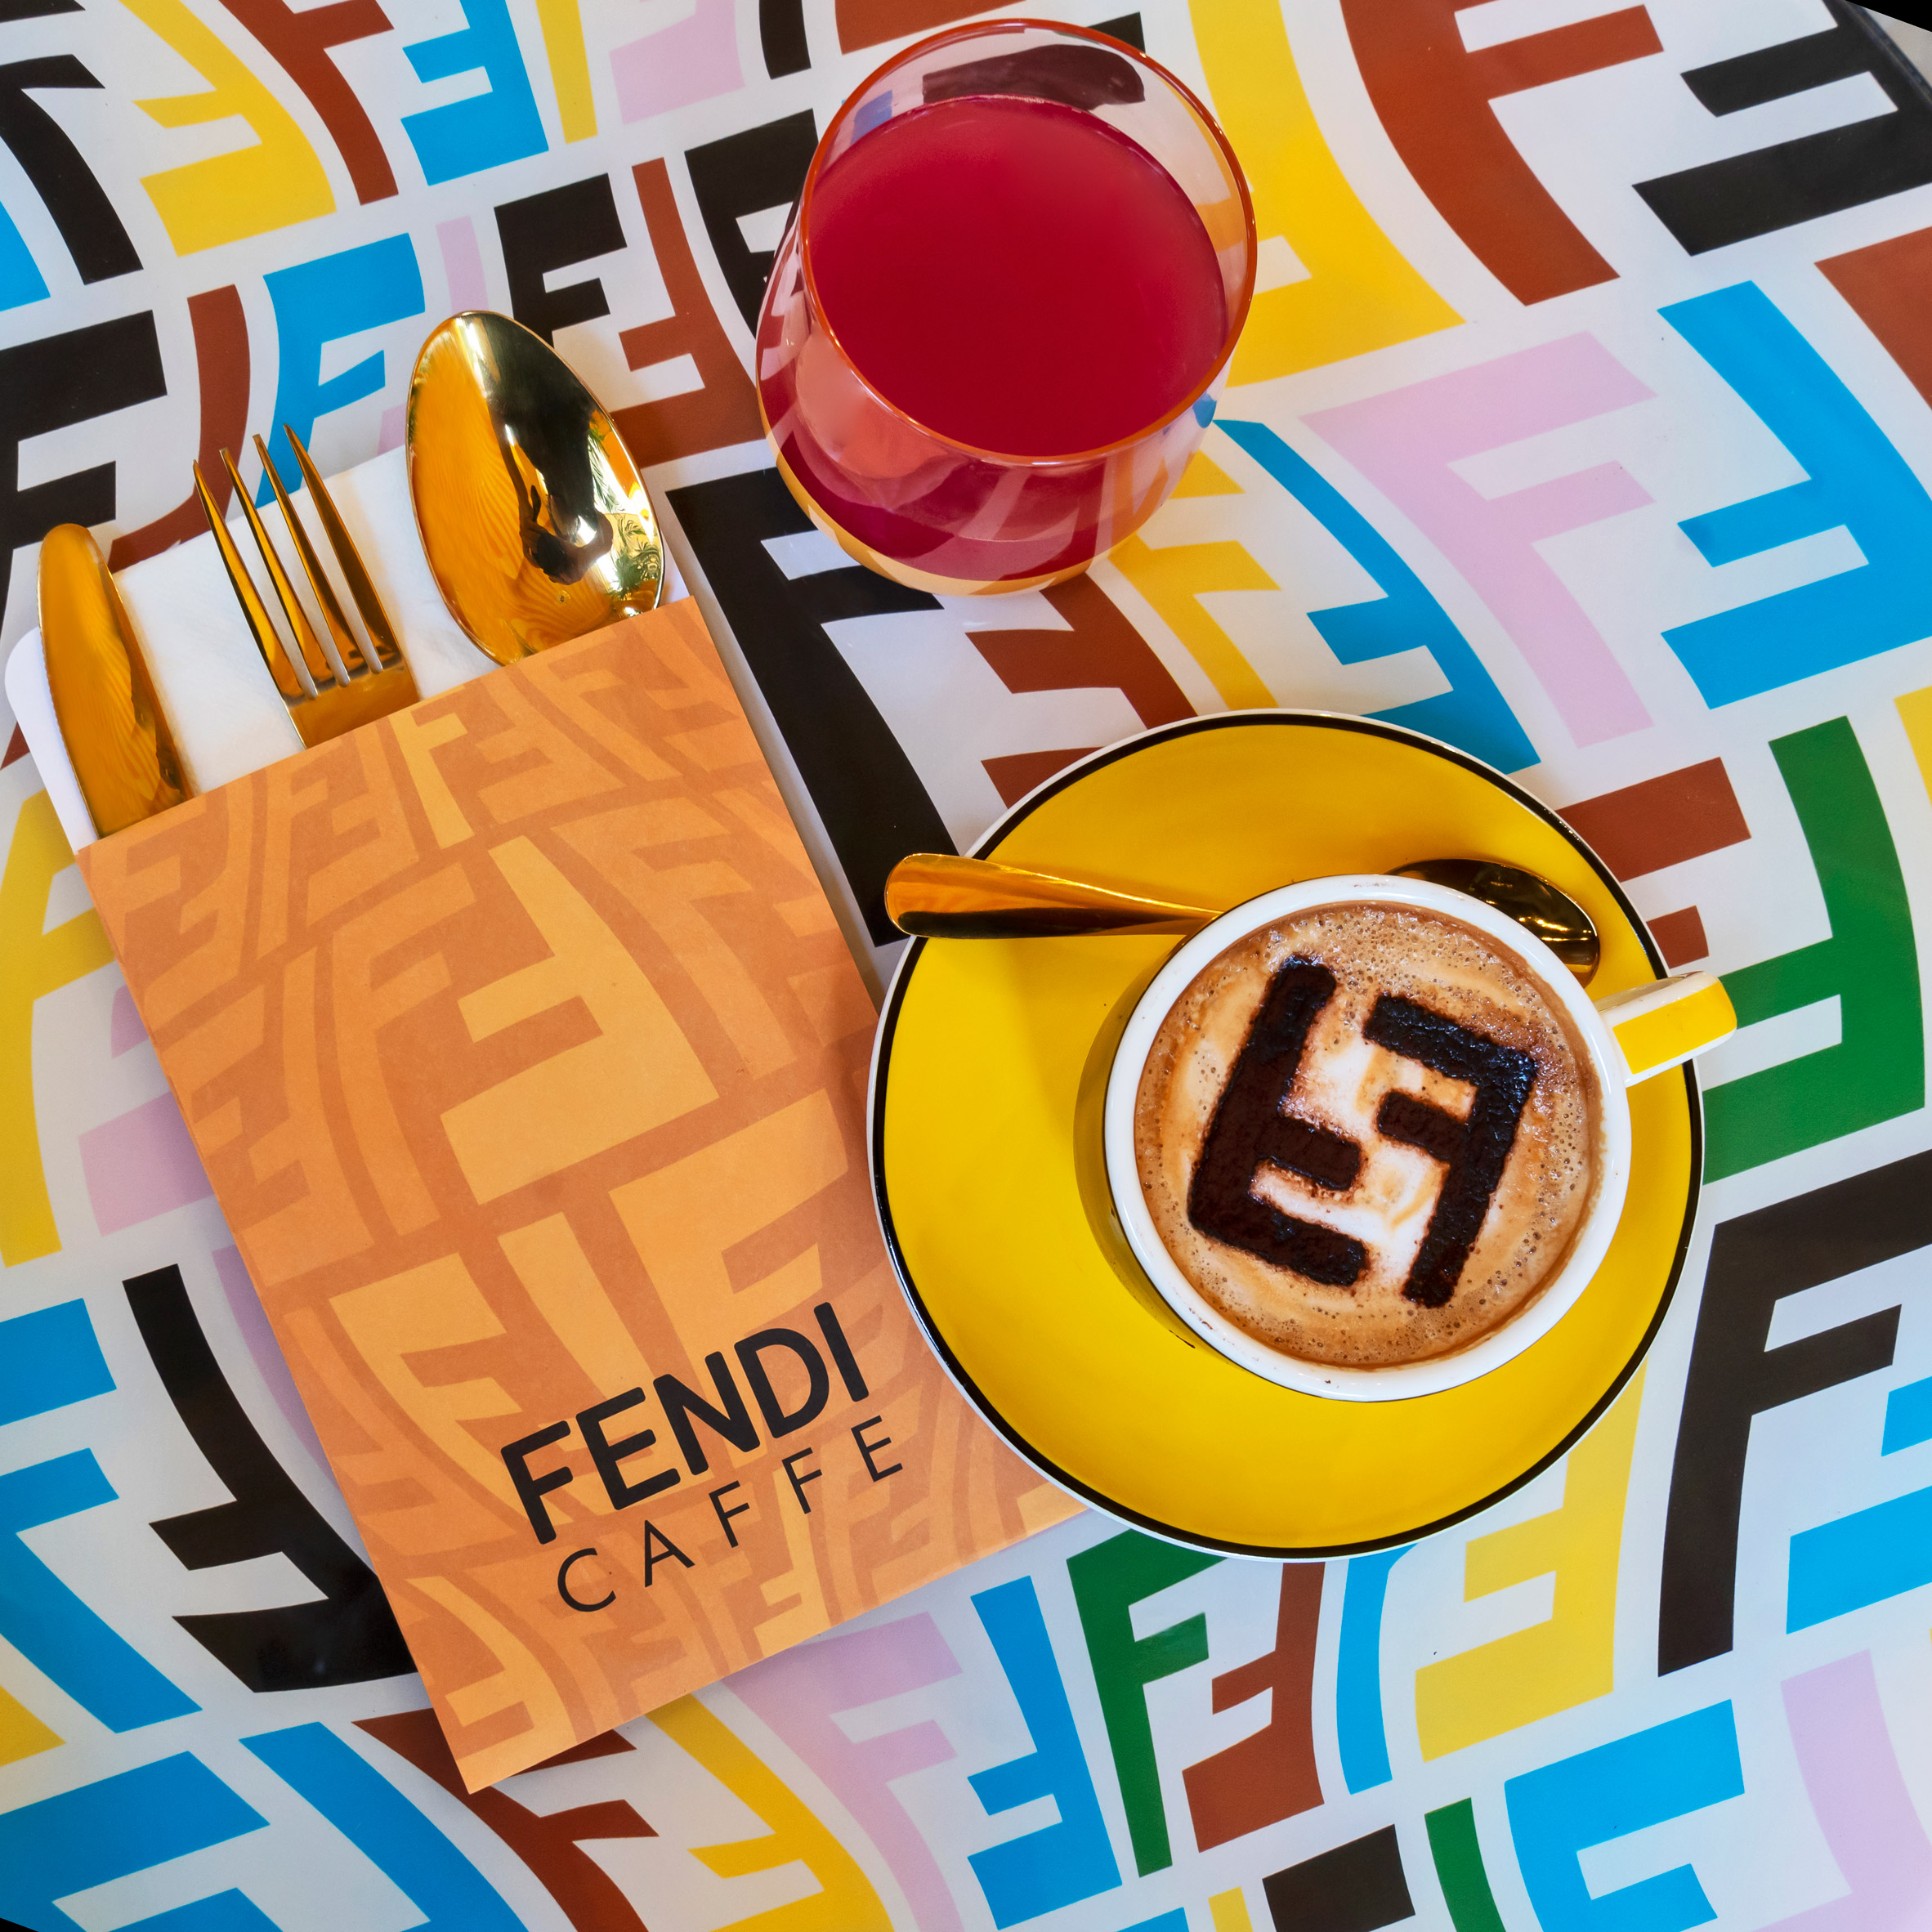 FENDI CAFFE - Summer 2021 Capsule Collection